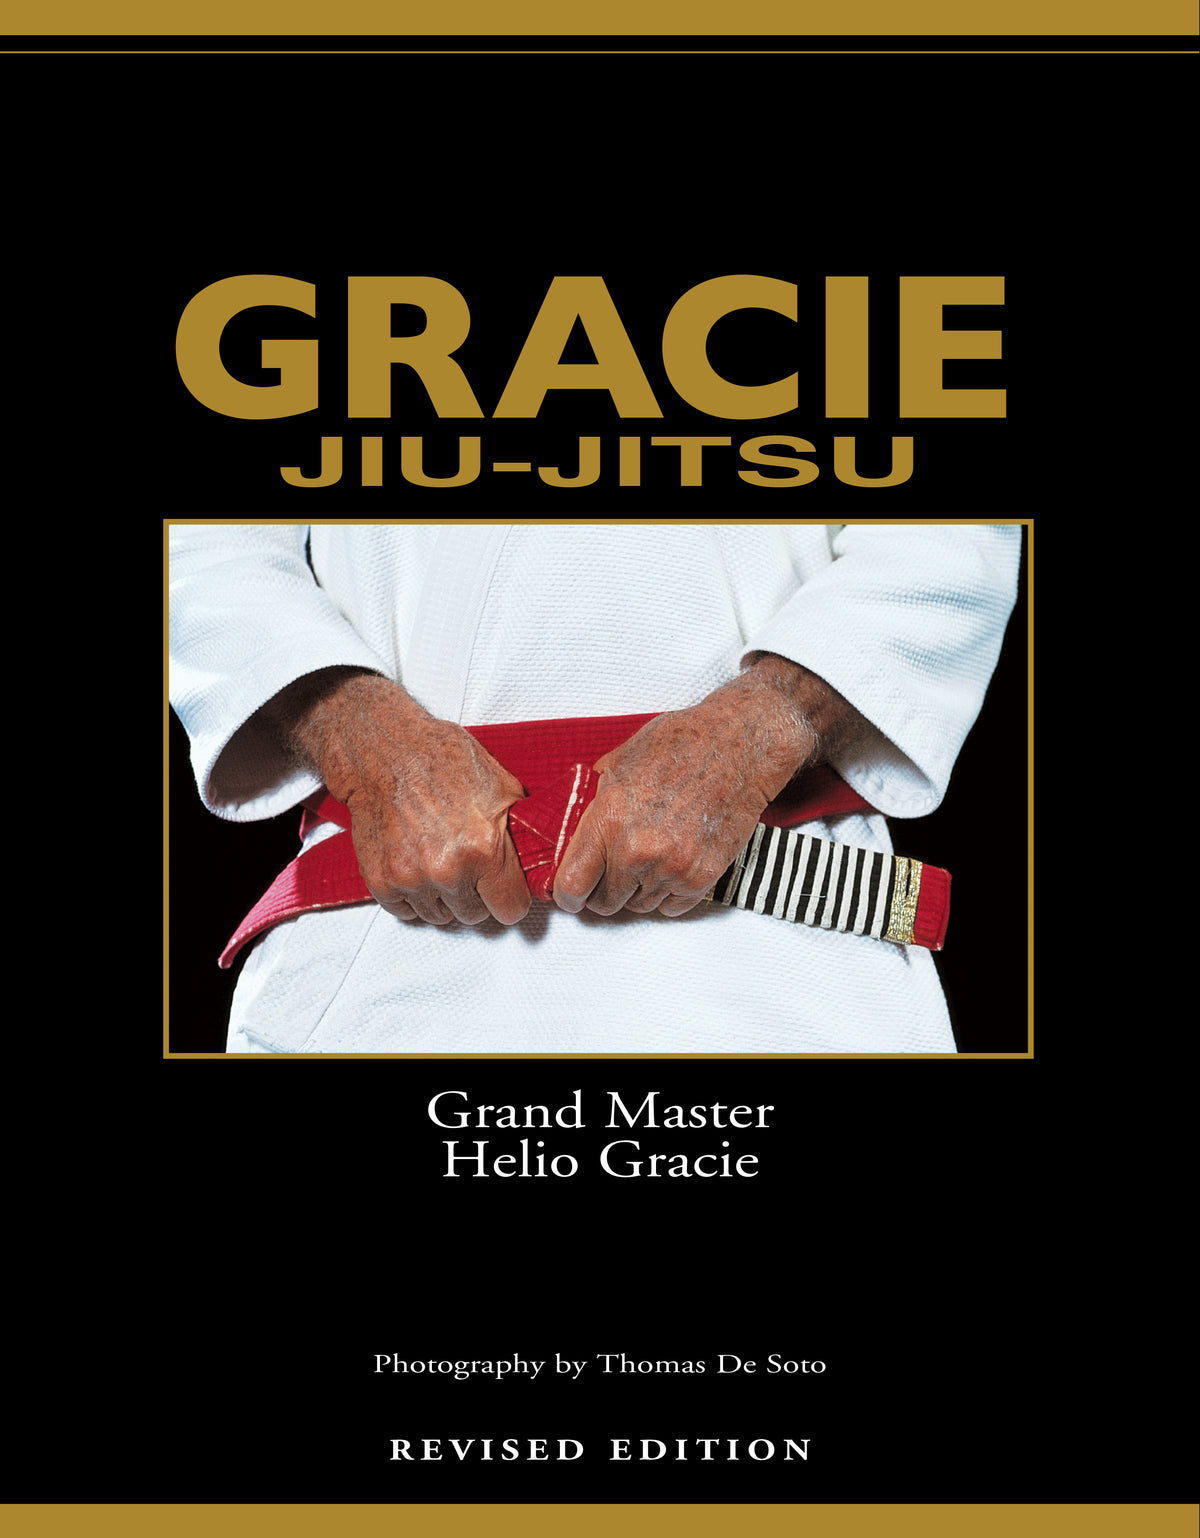 Case with 10 Books: GRACIE JIU-JITSU - THE MASTER TEXT BOOK BY HÉLIO GRACIE